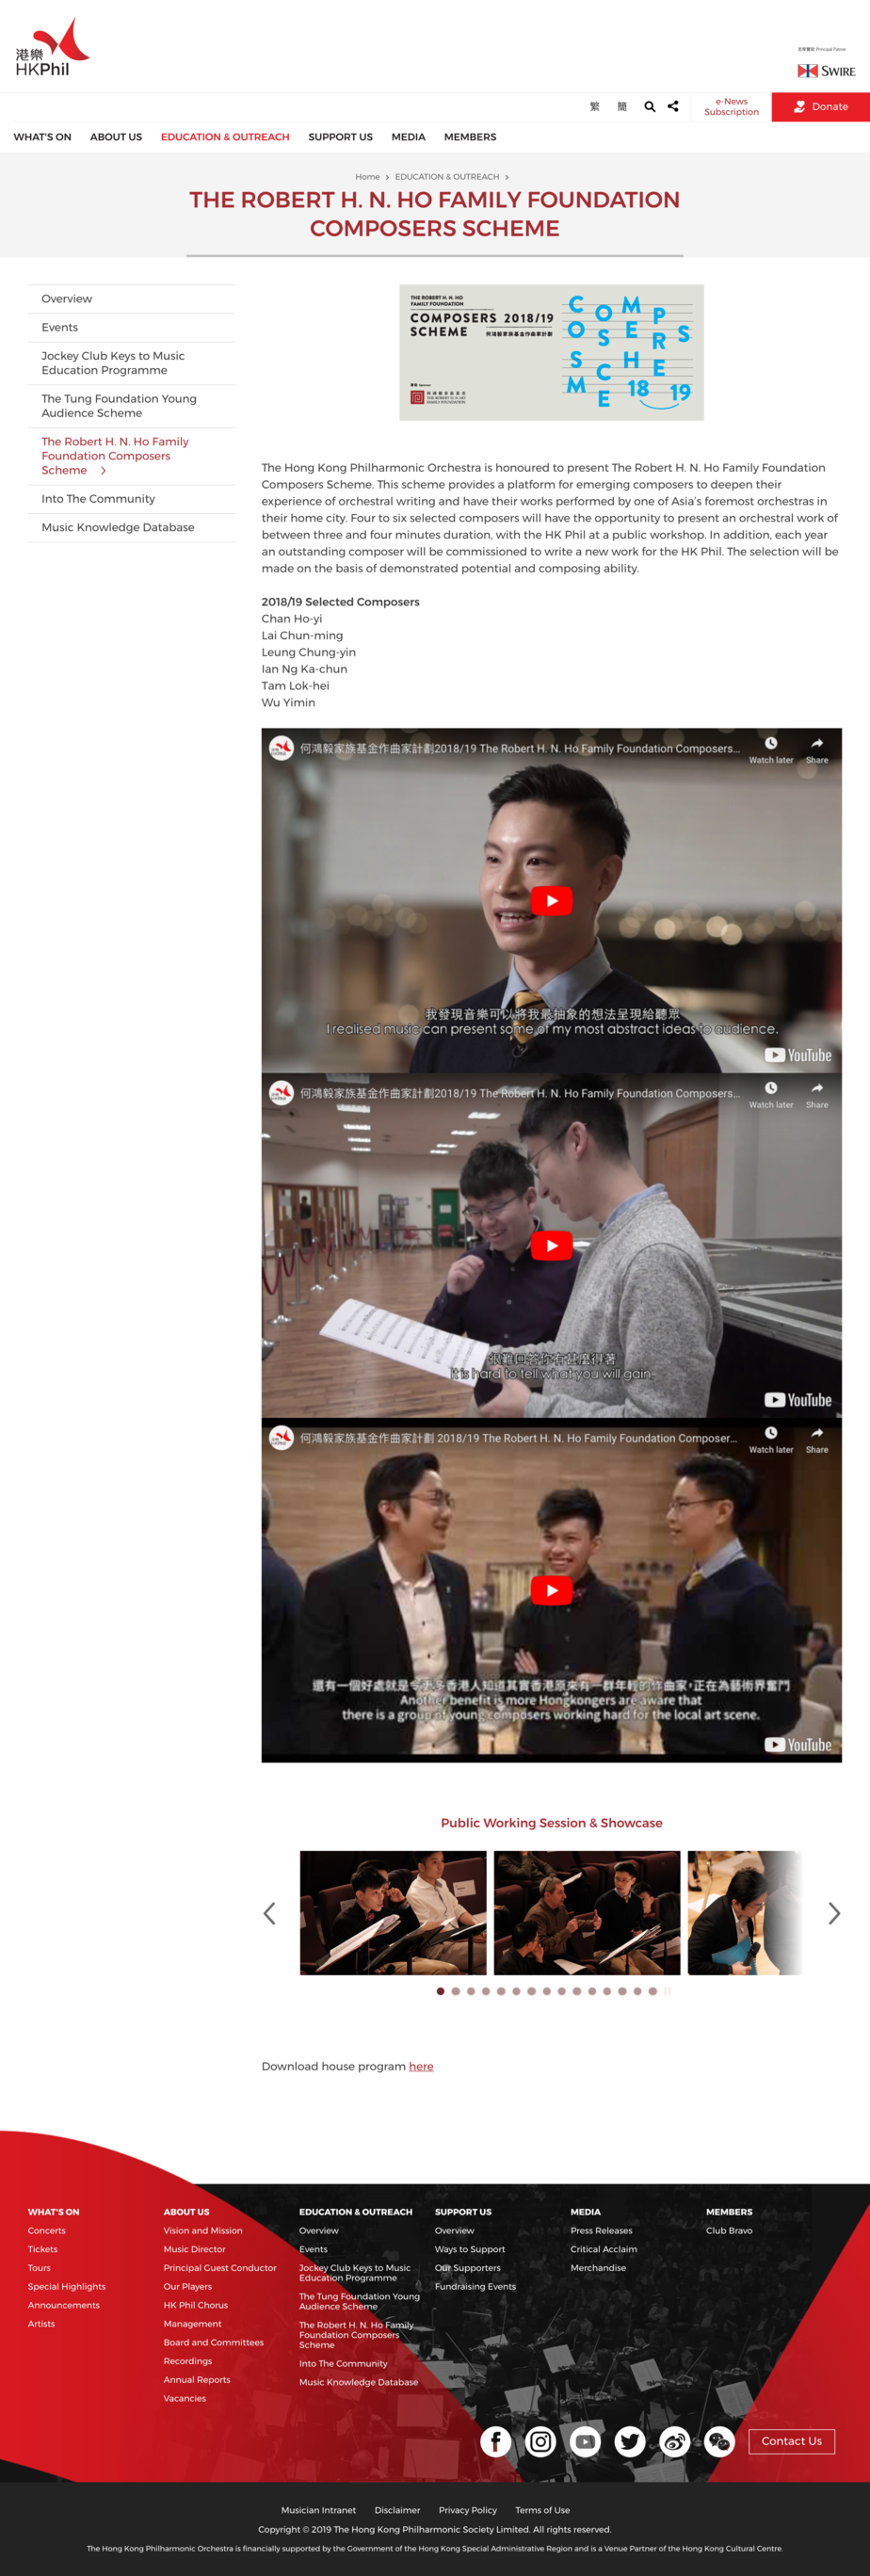 Hong Kong Philharmonic  website screenshot for desktop version 4 of 5